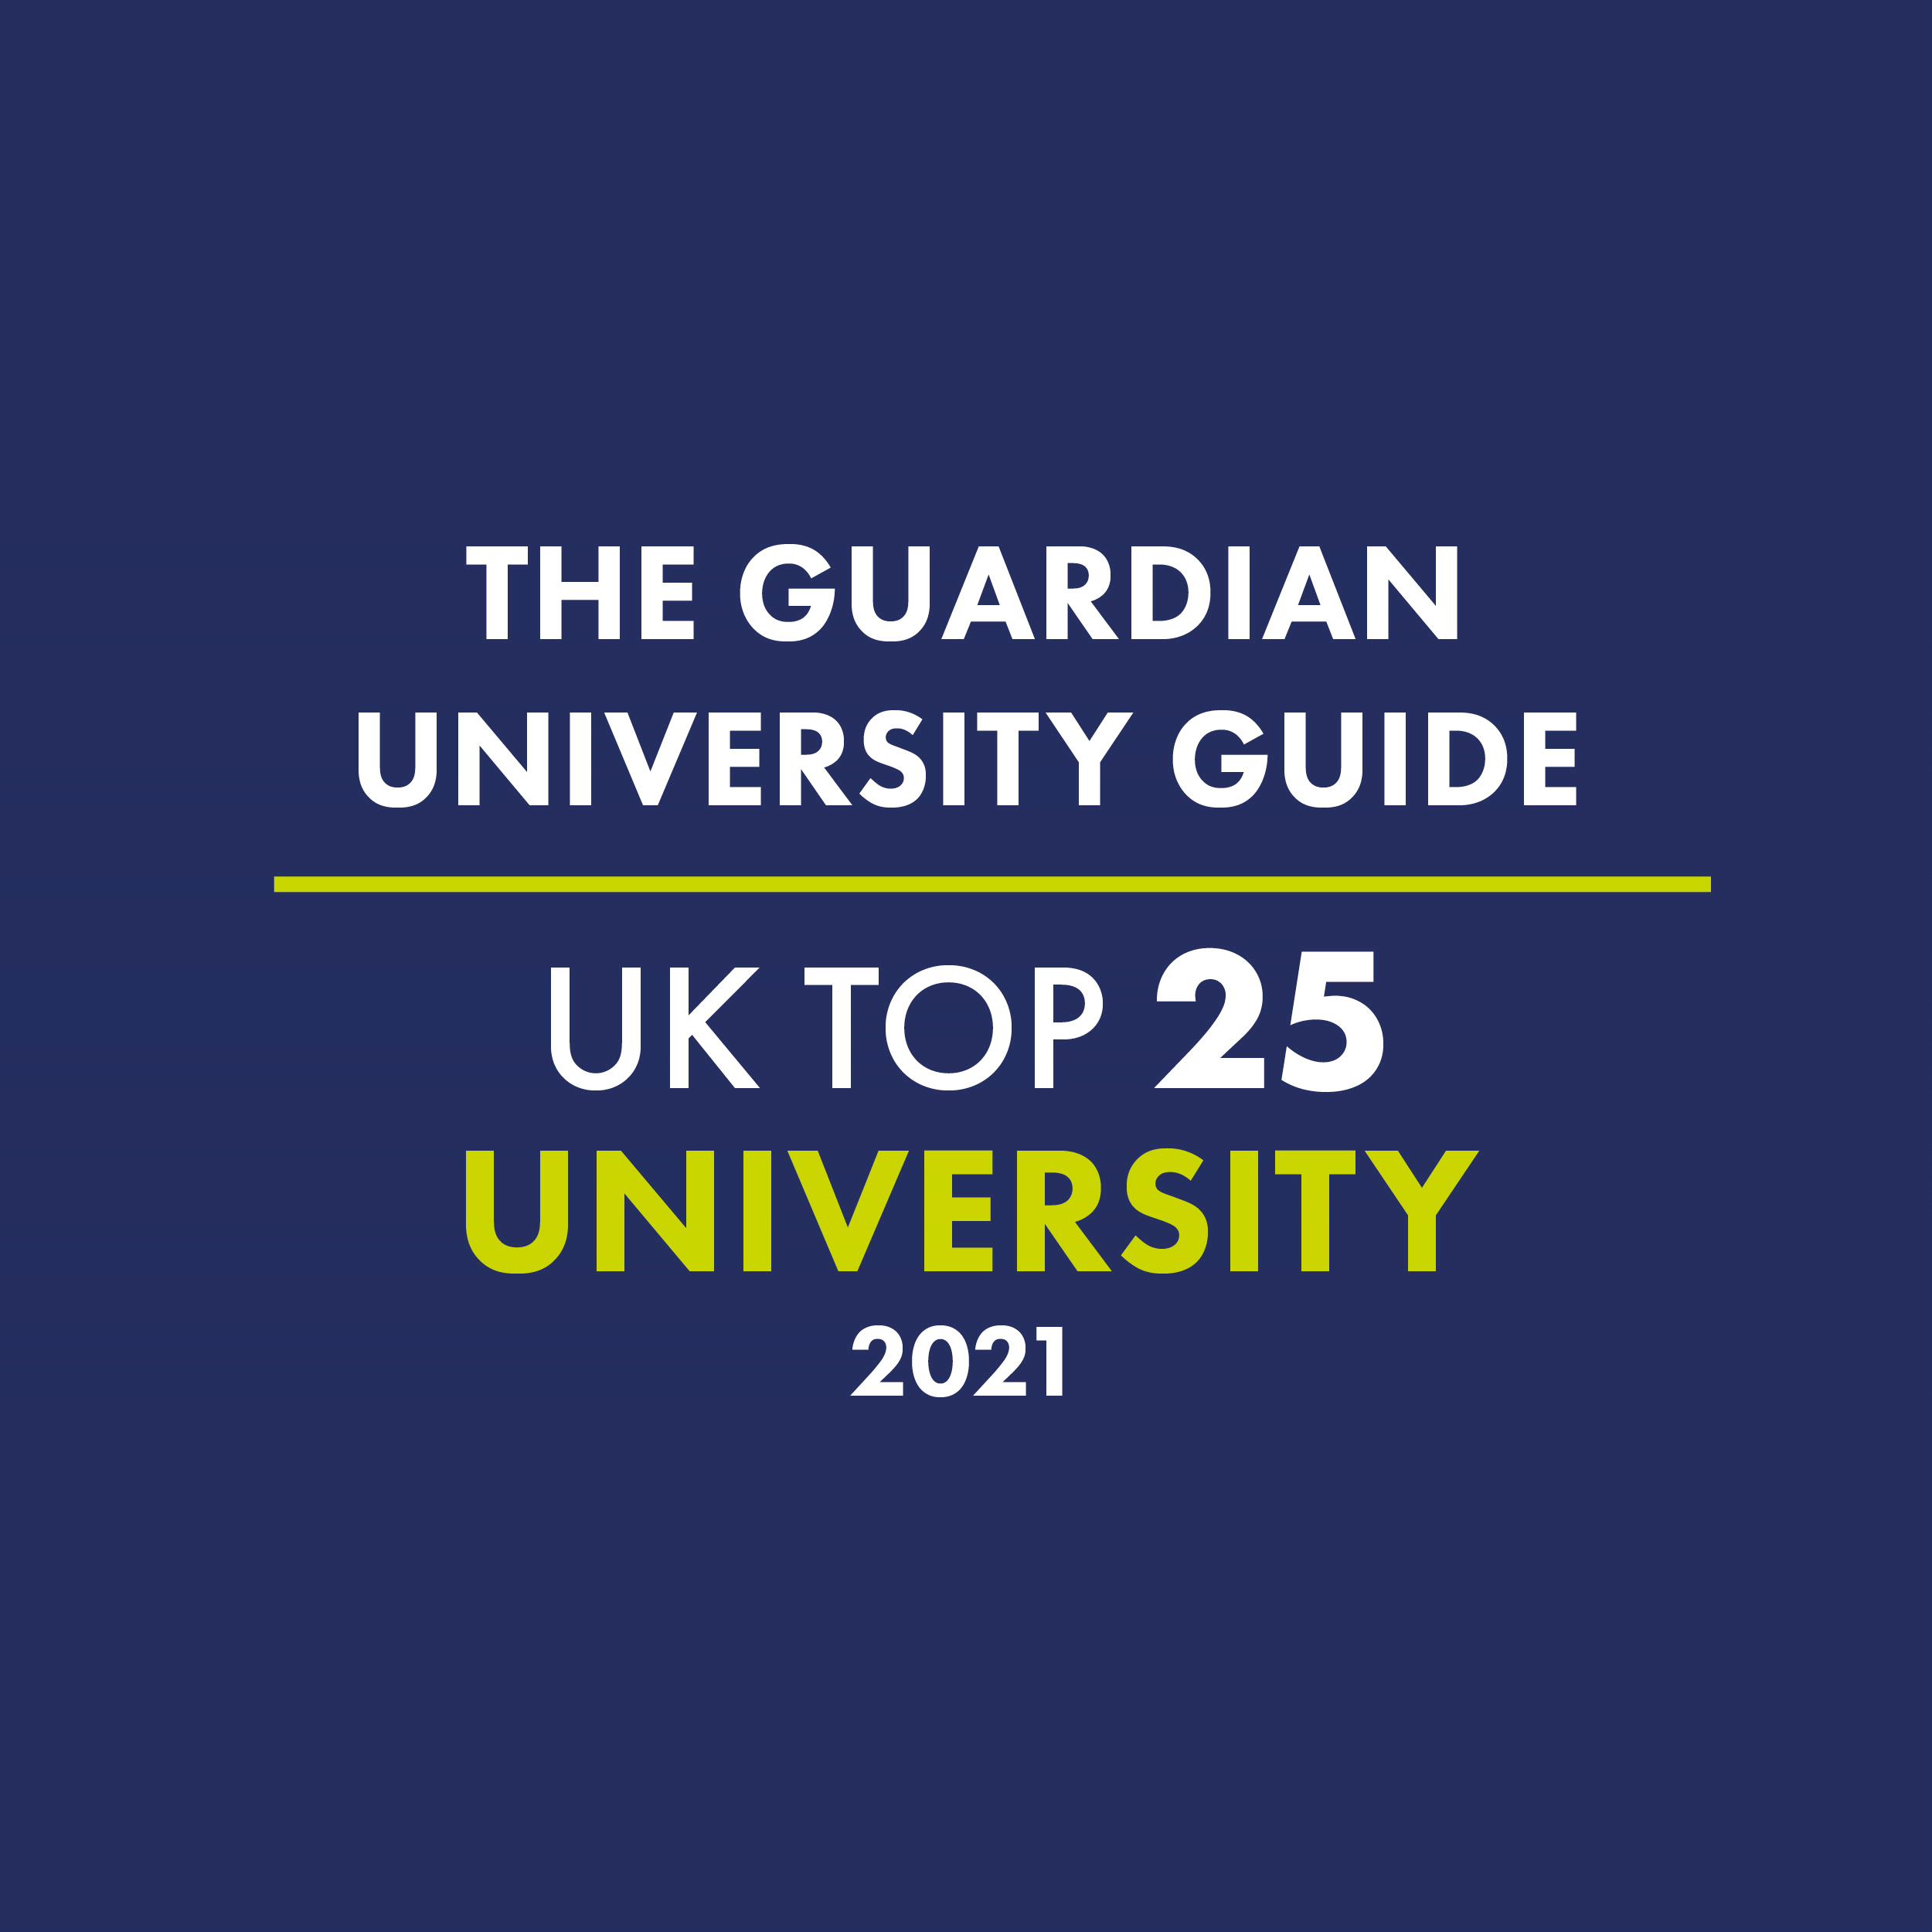 The Guardian University Guide - UK Top 25 University 2021